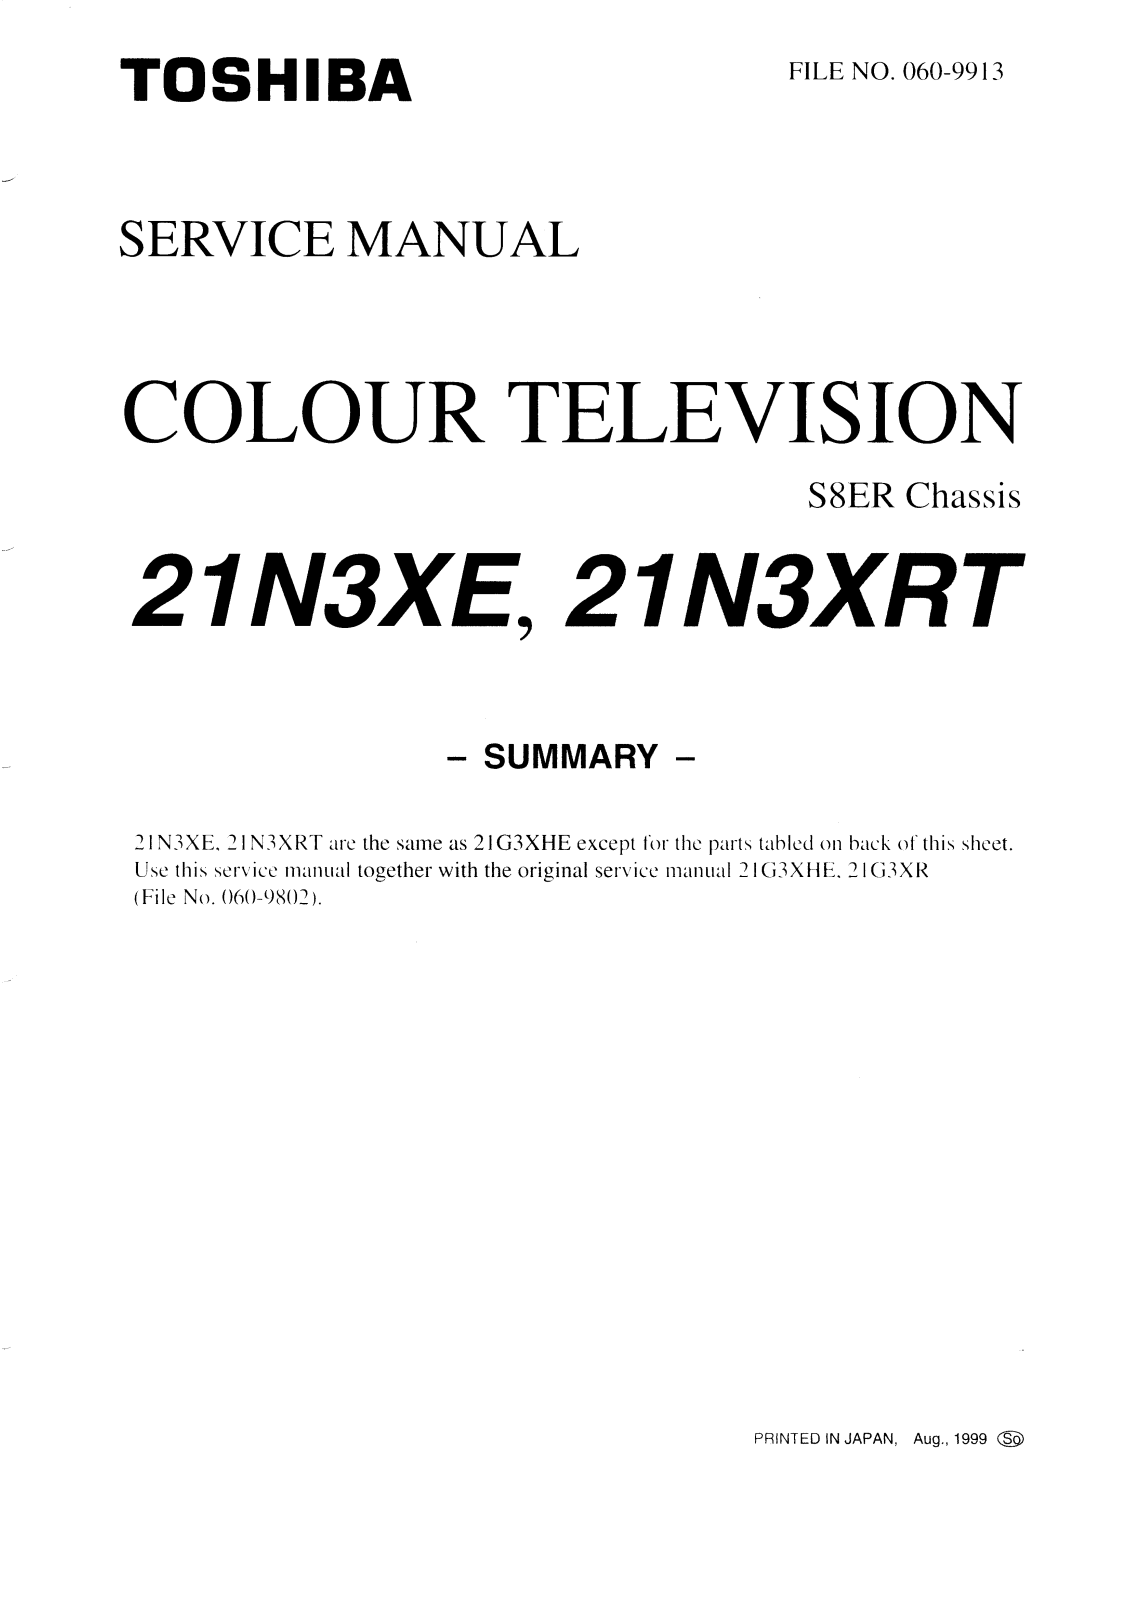 Toshiba 21N3XE, 21N3XRT Service Manual